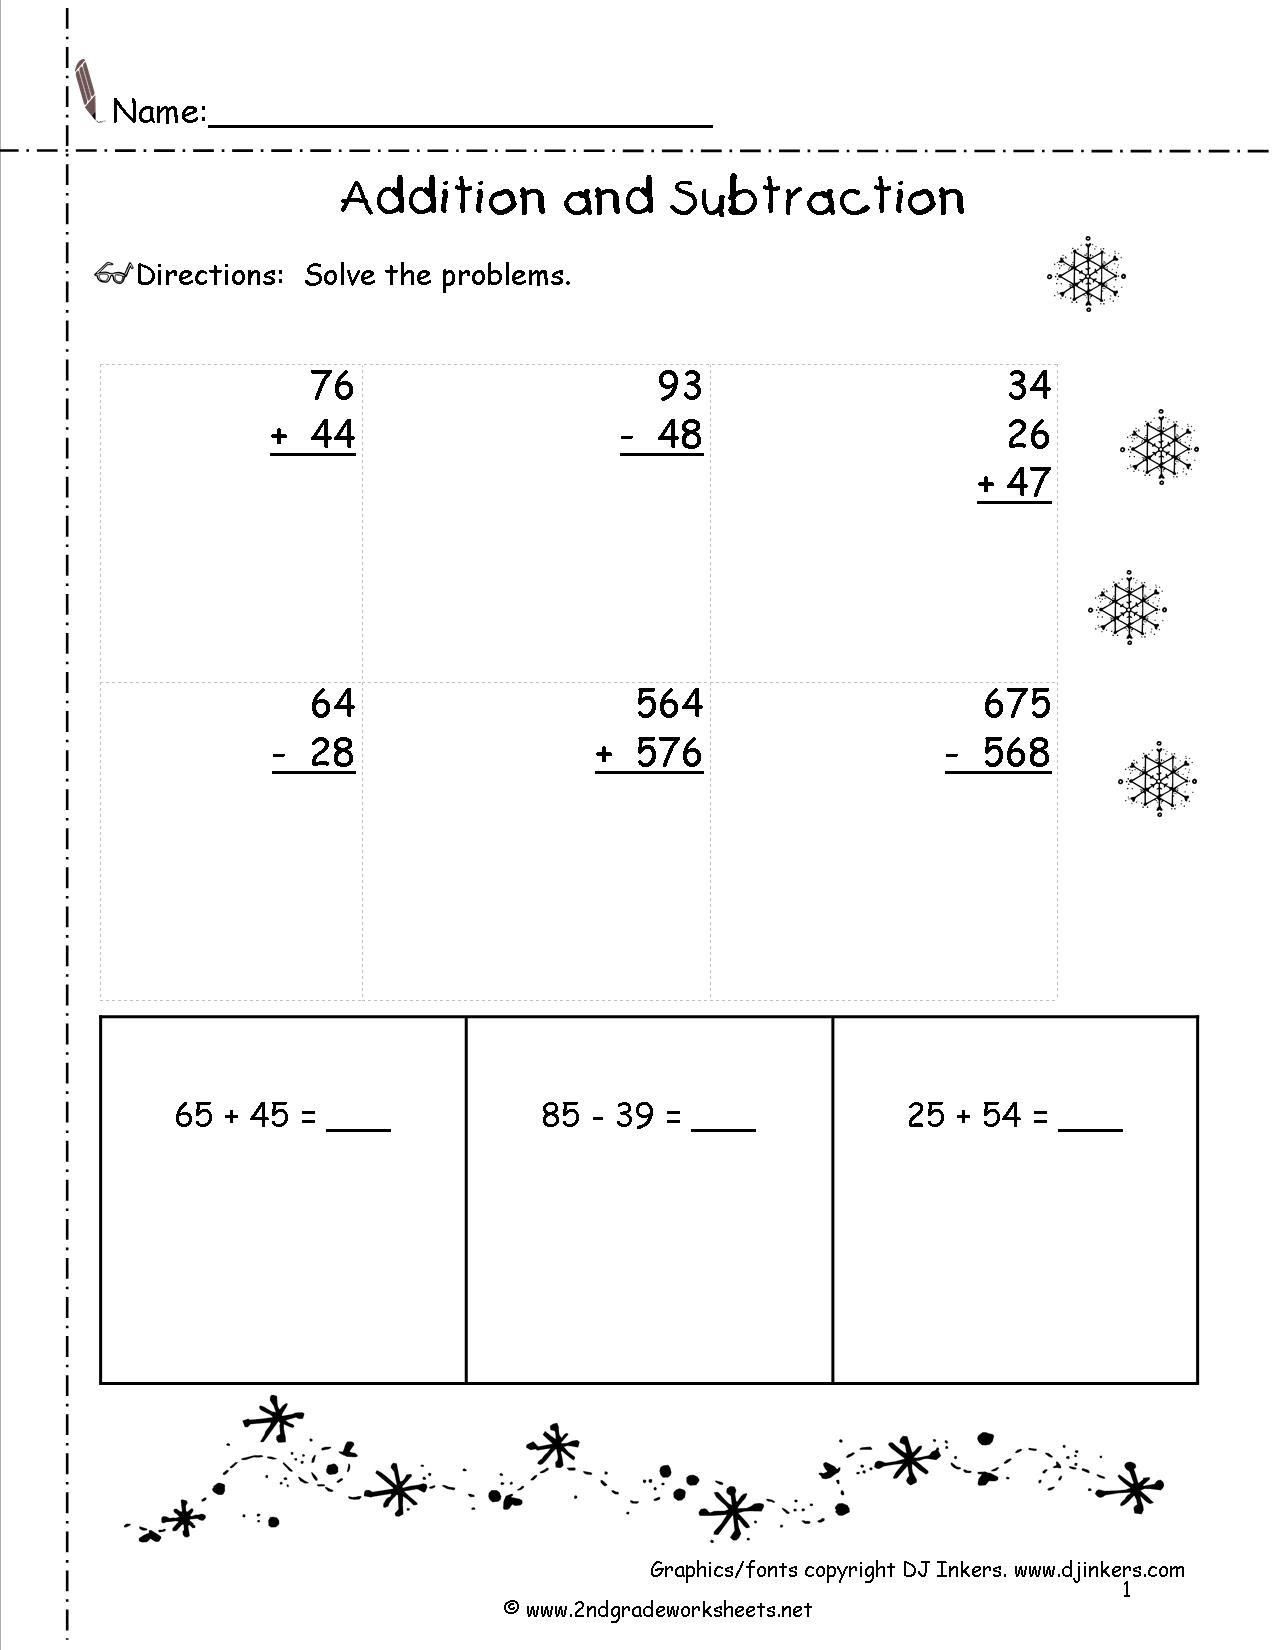 winter-lesson-plans-themes-printouts-crafts